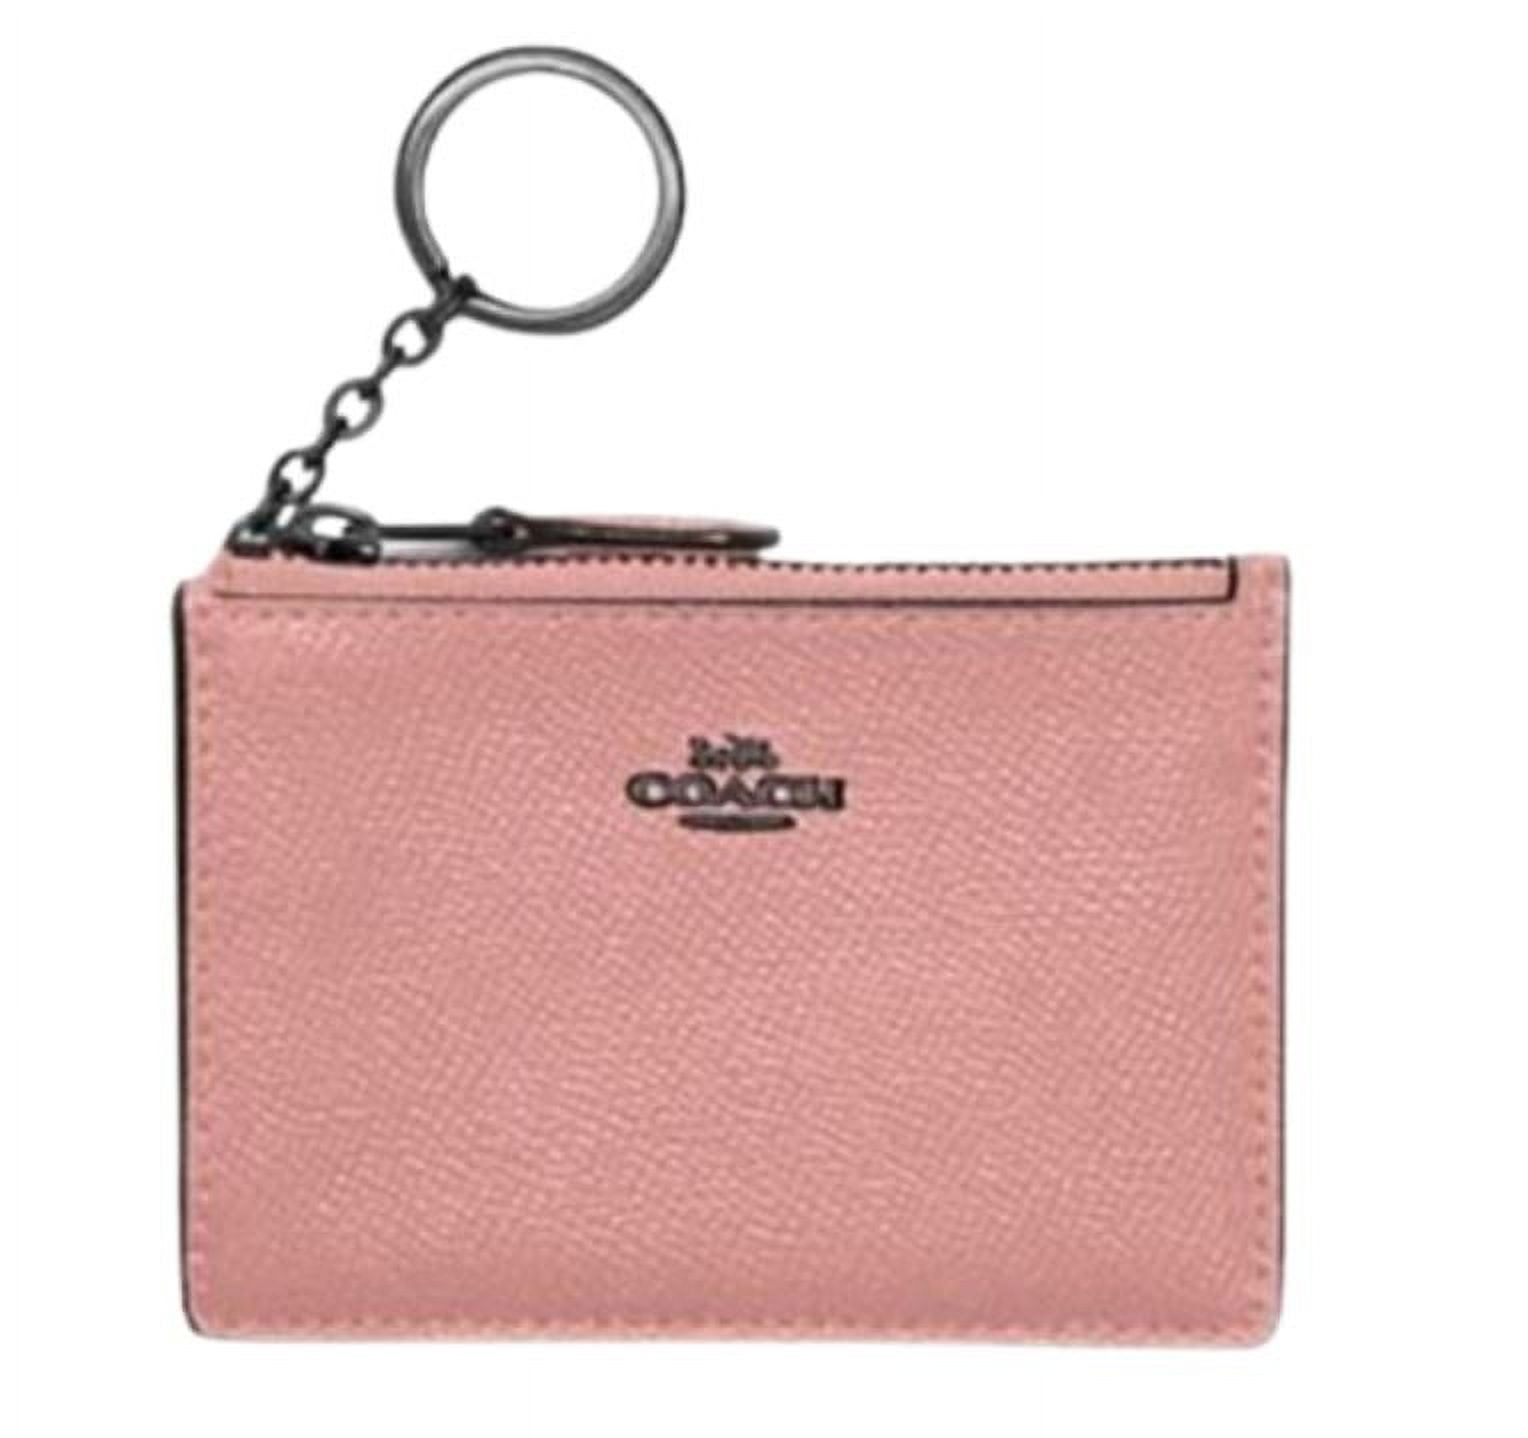 00's Vintage Pink Mini Leather Baguette Purse Bag by Coach | Shop THRILLING